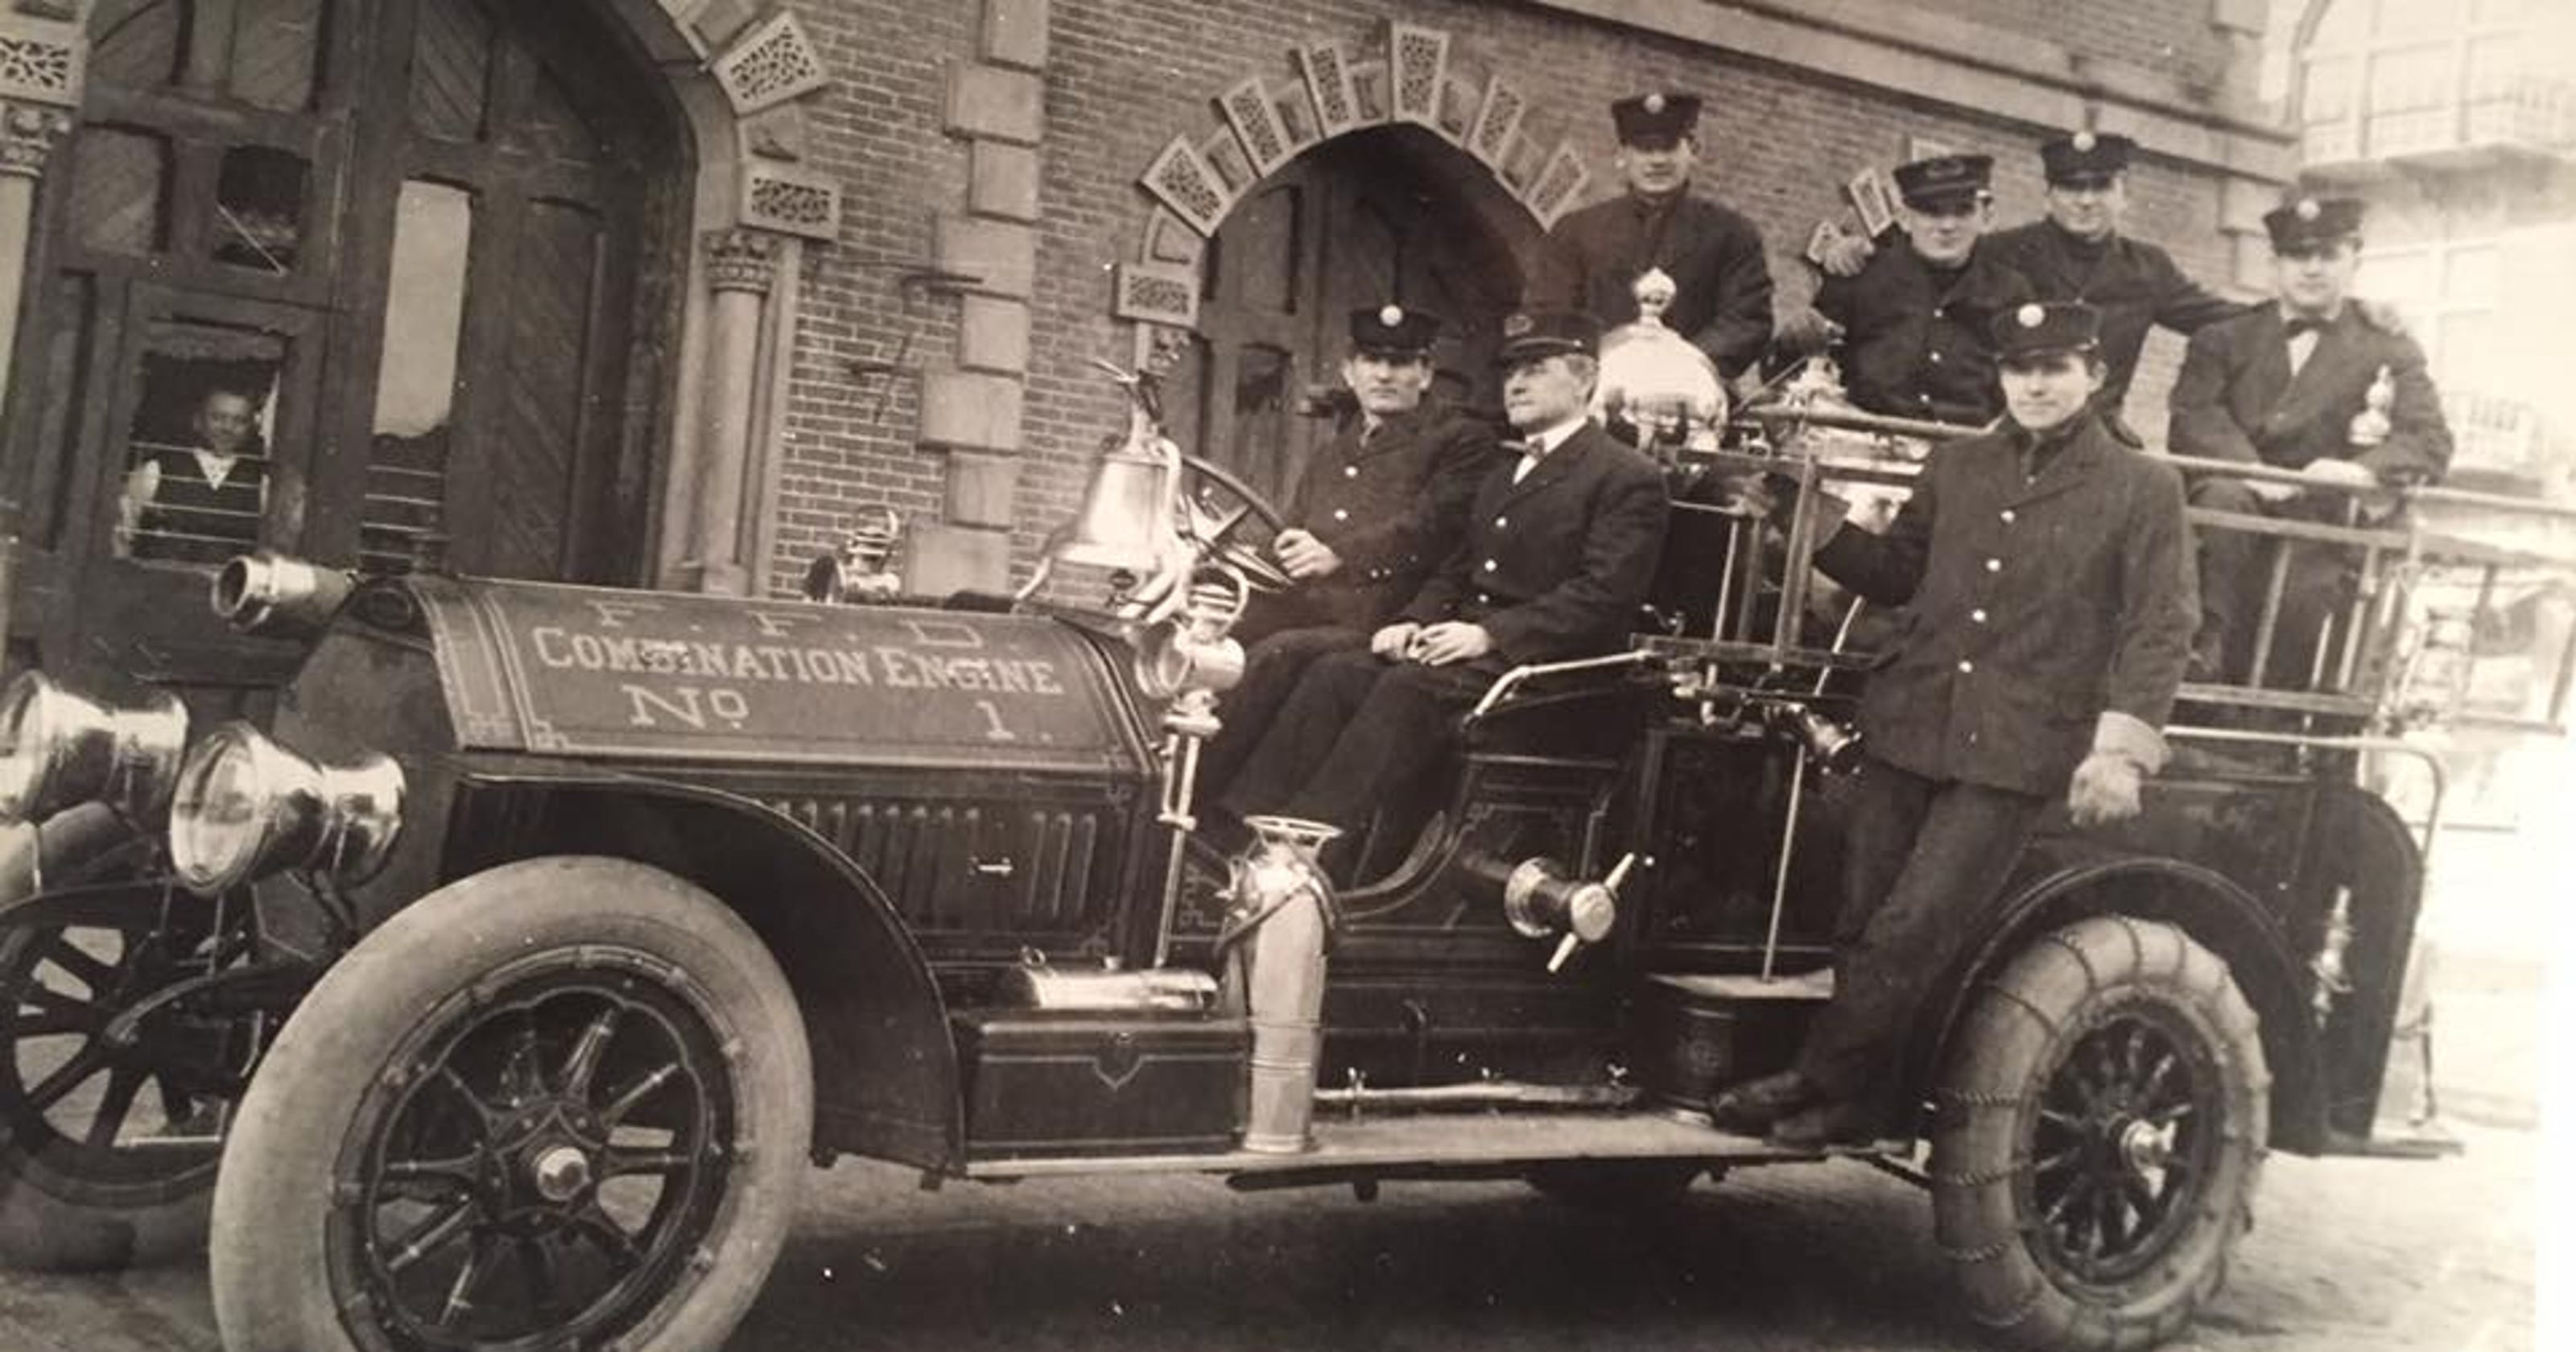 History Spotlight: Fire engine, early 1900s